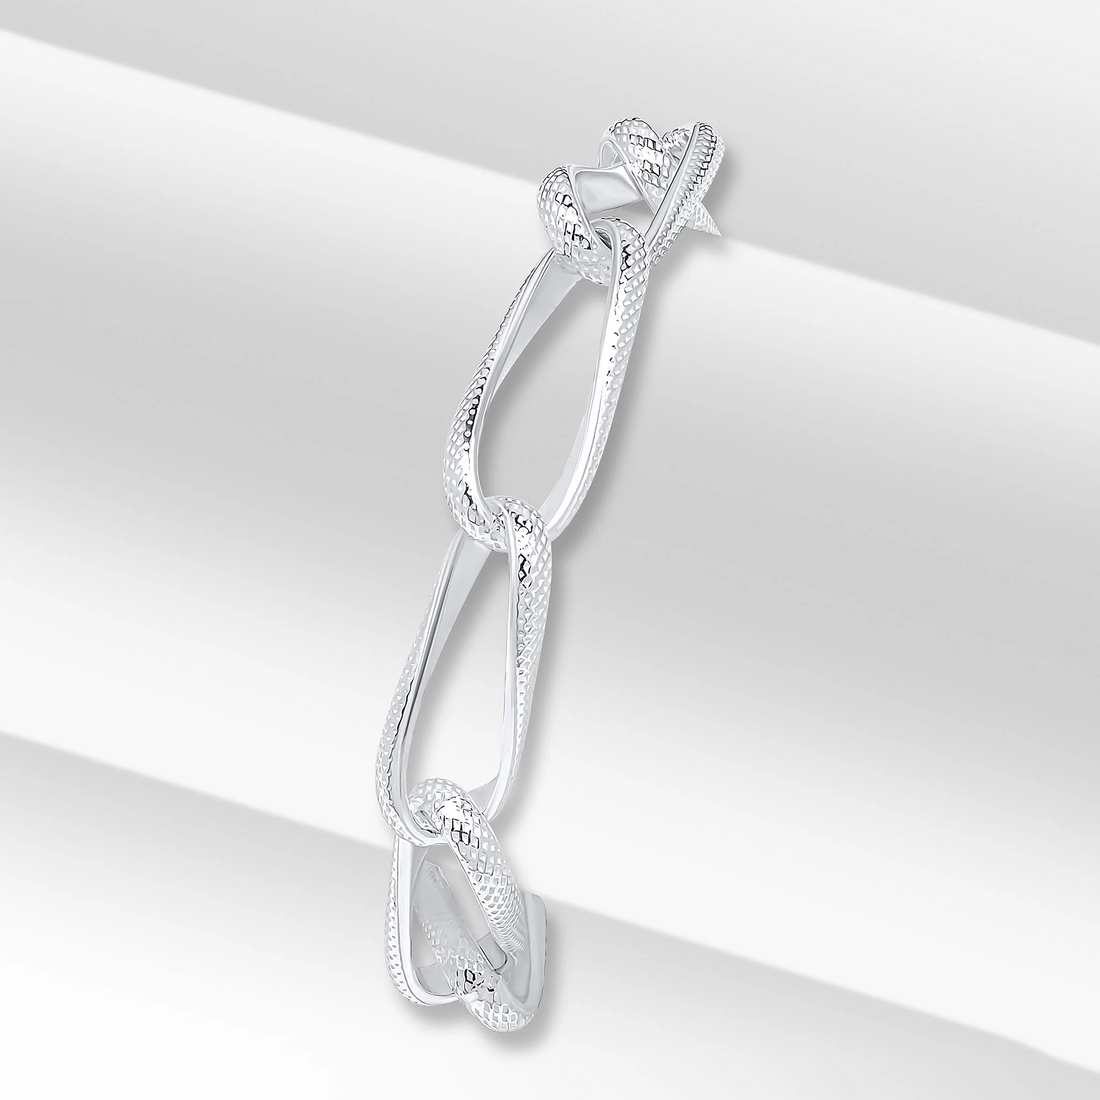 Silver Handmade 10mm Loose Curb Chain or Bracelet - Robert Anthony Jewellers, Edinburgh